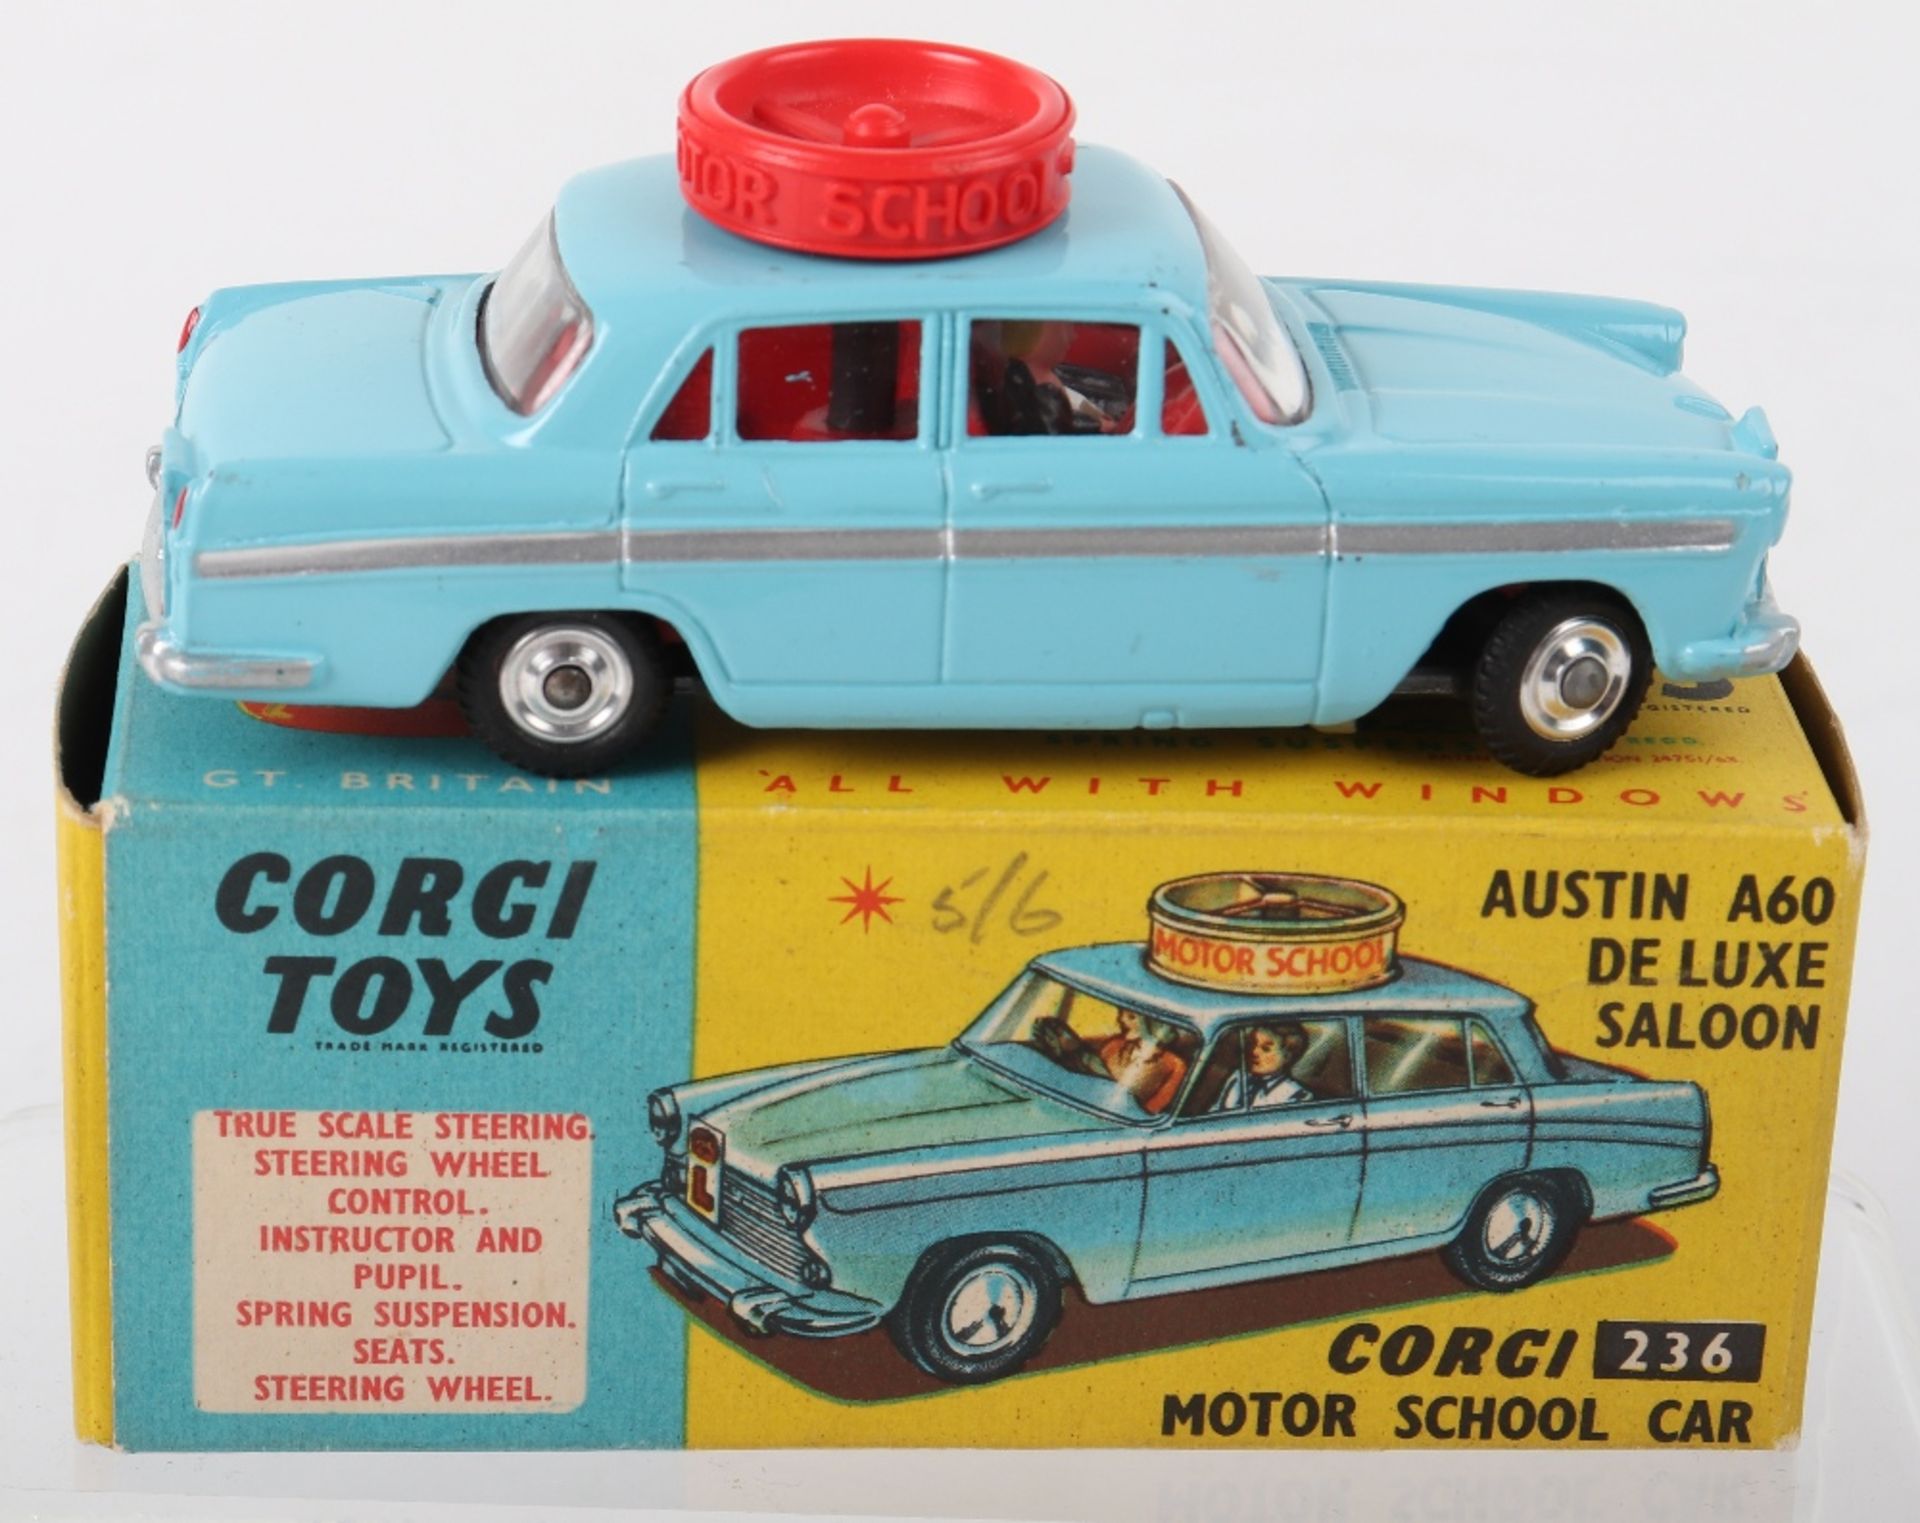 Corgi Toys 236 Austin A60 De Luxe Saloon ‘Corgi’ Motor School Car - Bild 2 aus 7